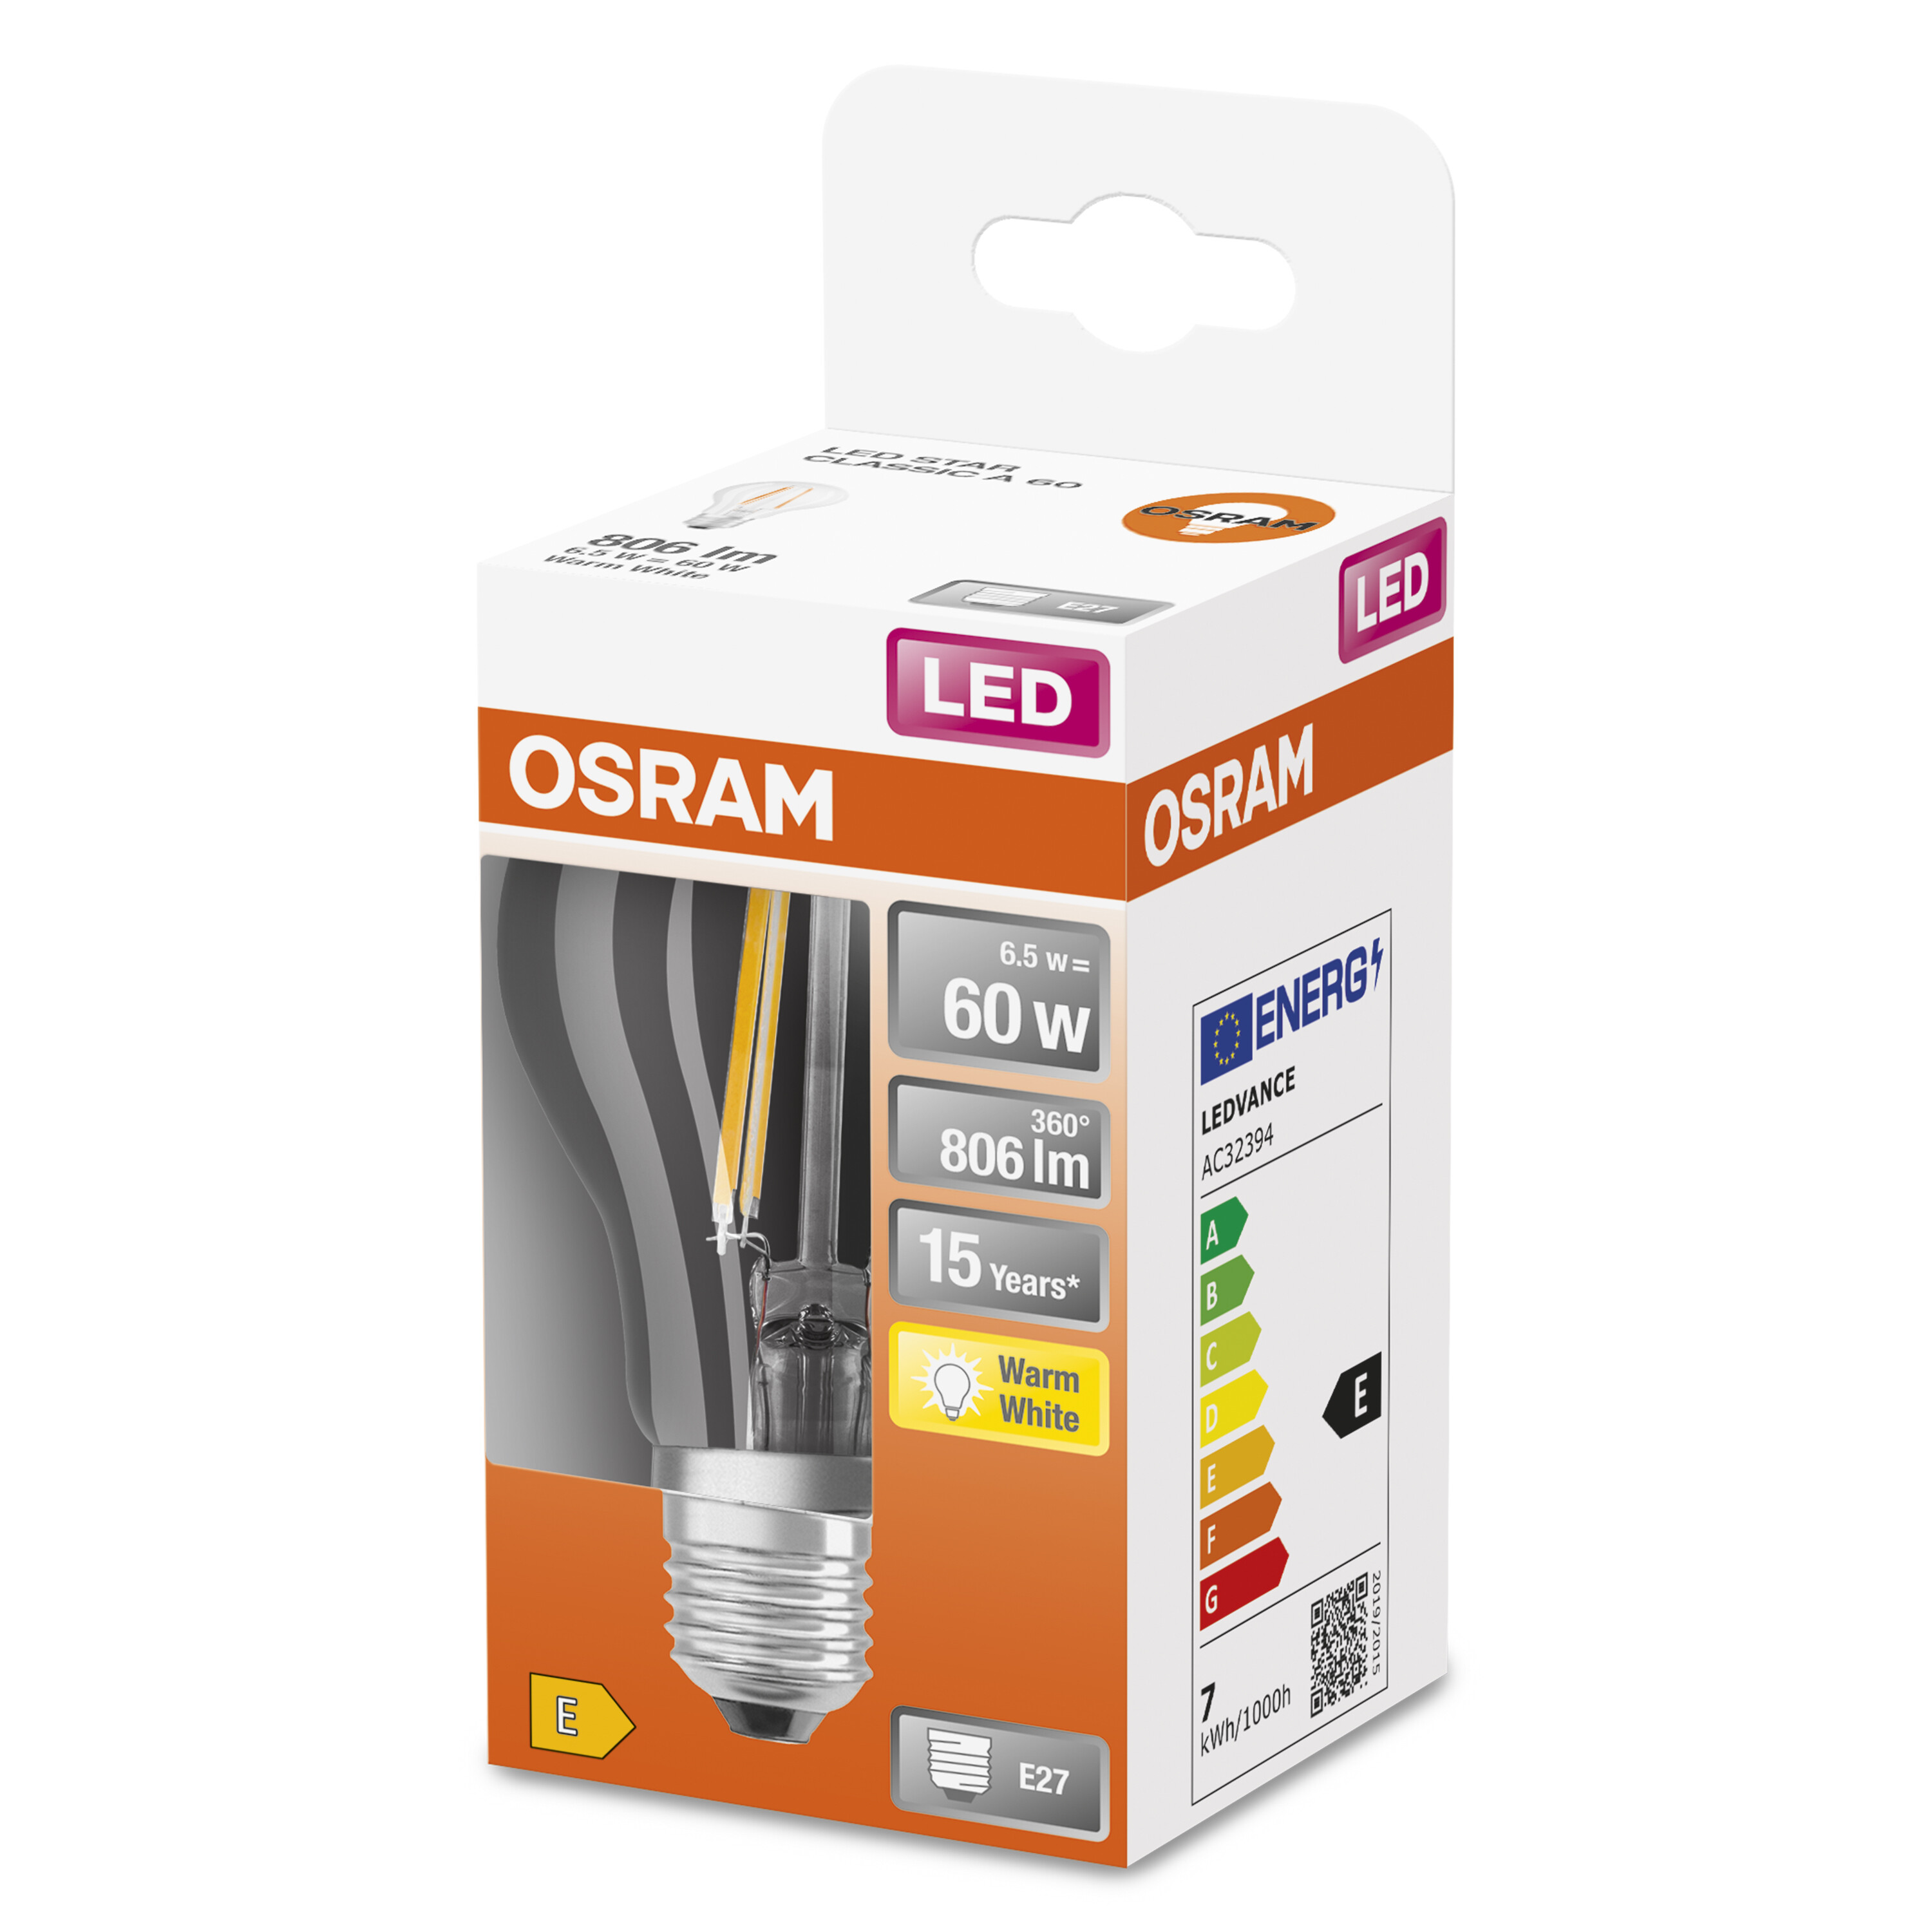 OSRAM  LED Retrofit CLASSIC A Lumen 806 LED Warmweiß Lampe